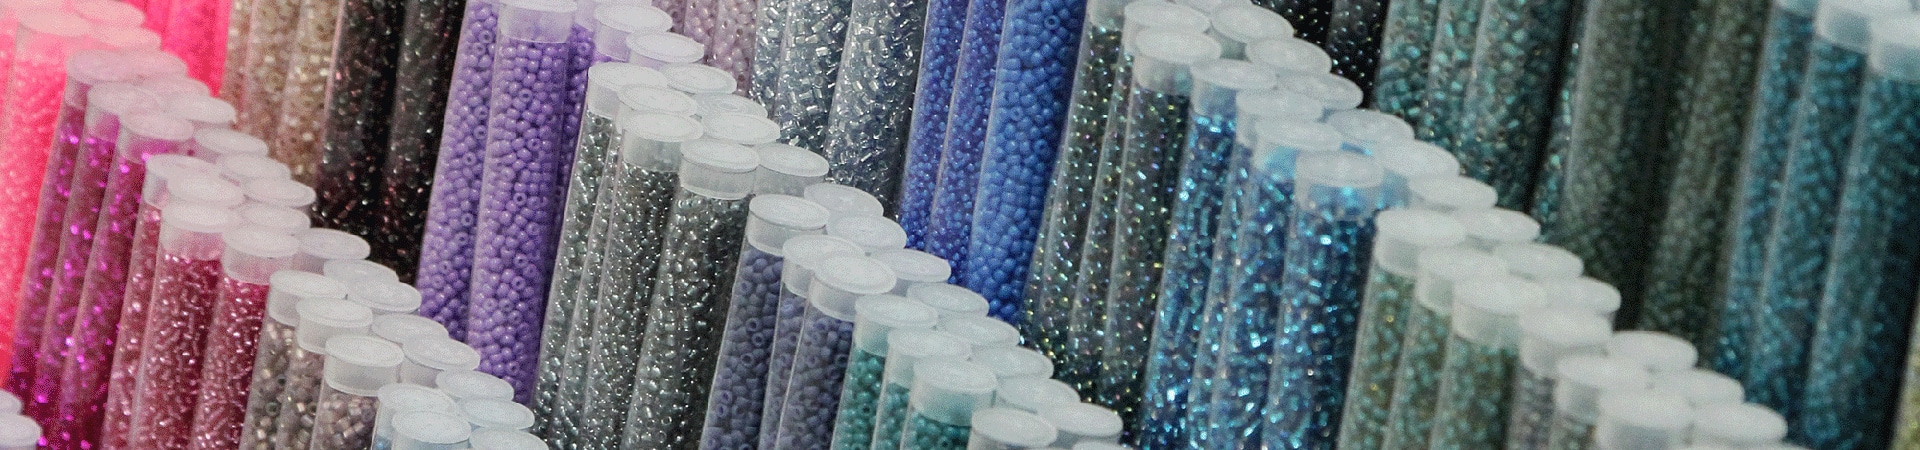 Japanese Seed Beads available at Alaska Bead Company